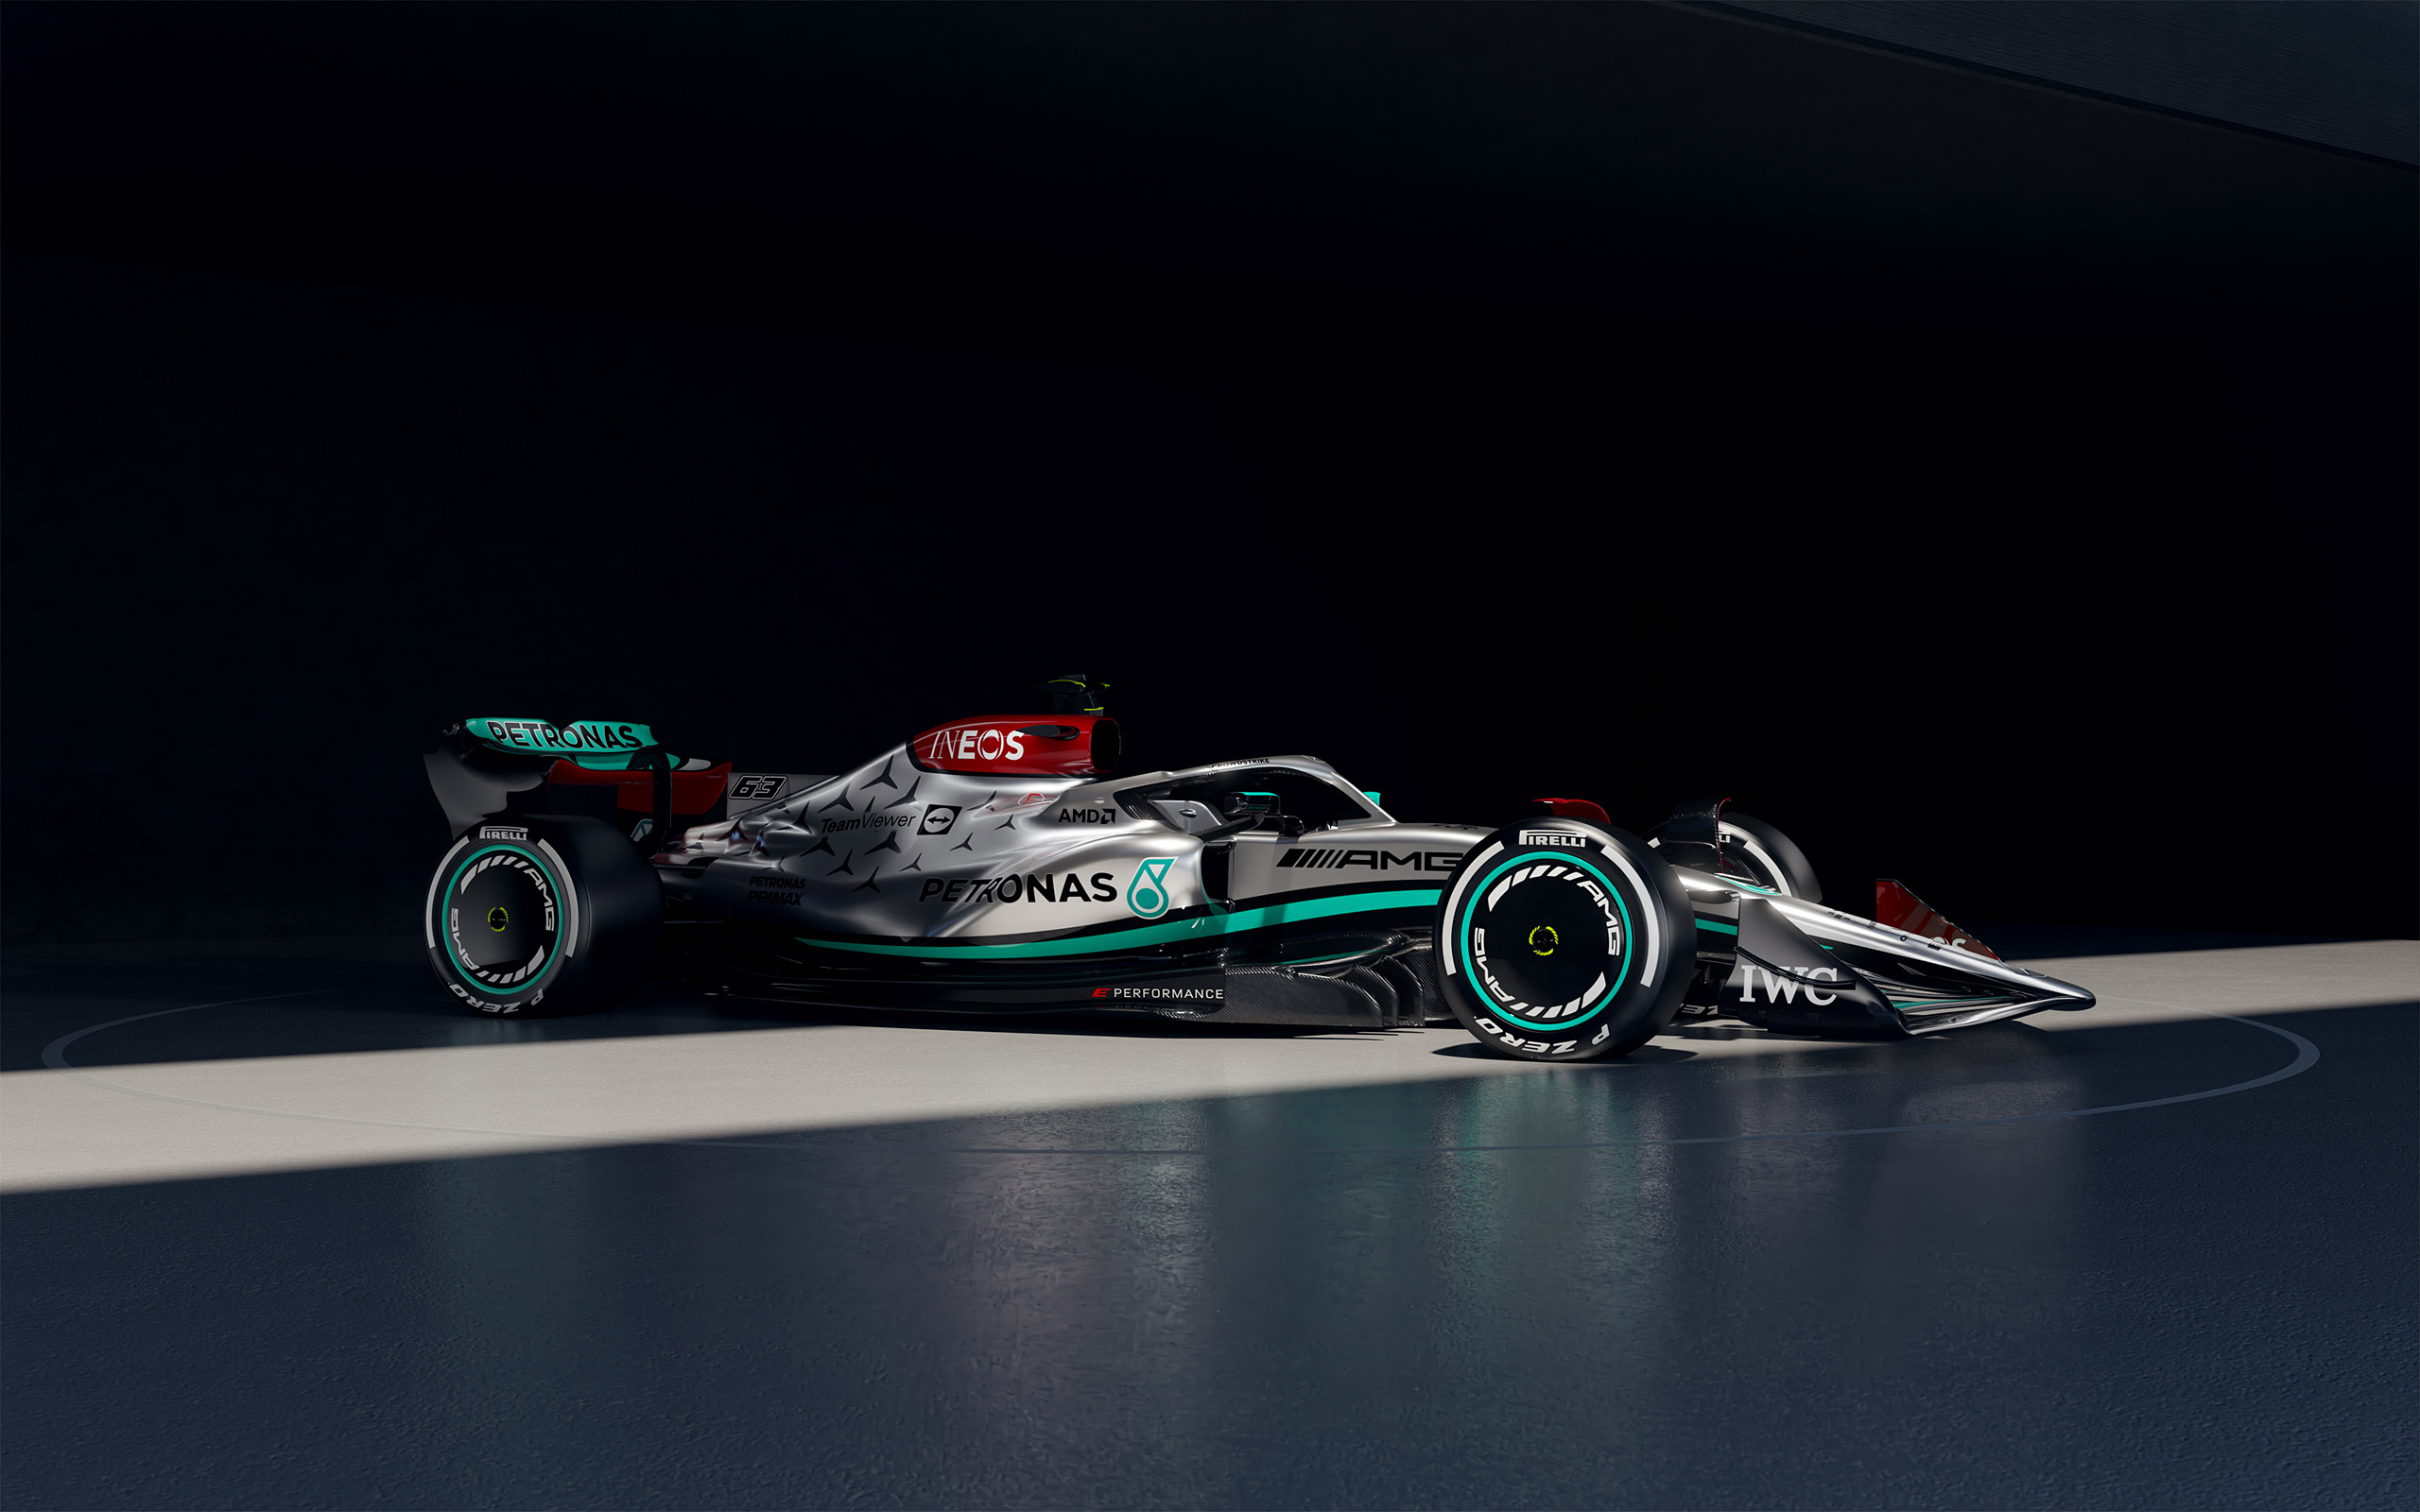  2022 Mercedes AMG W13 F1 E Performance Wallpaper.